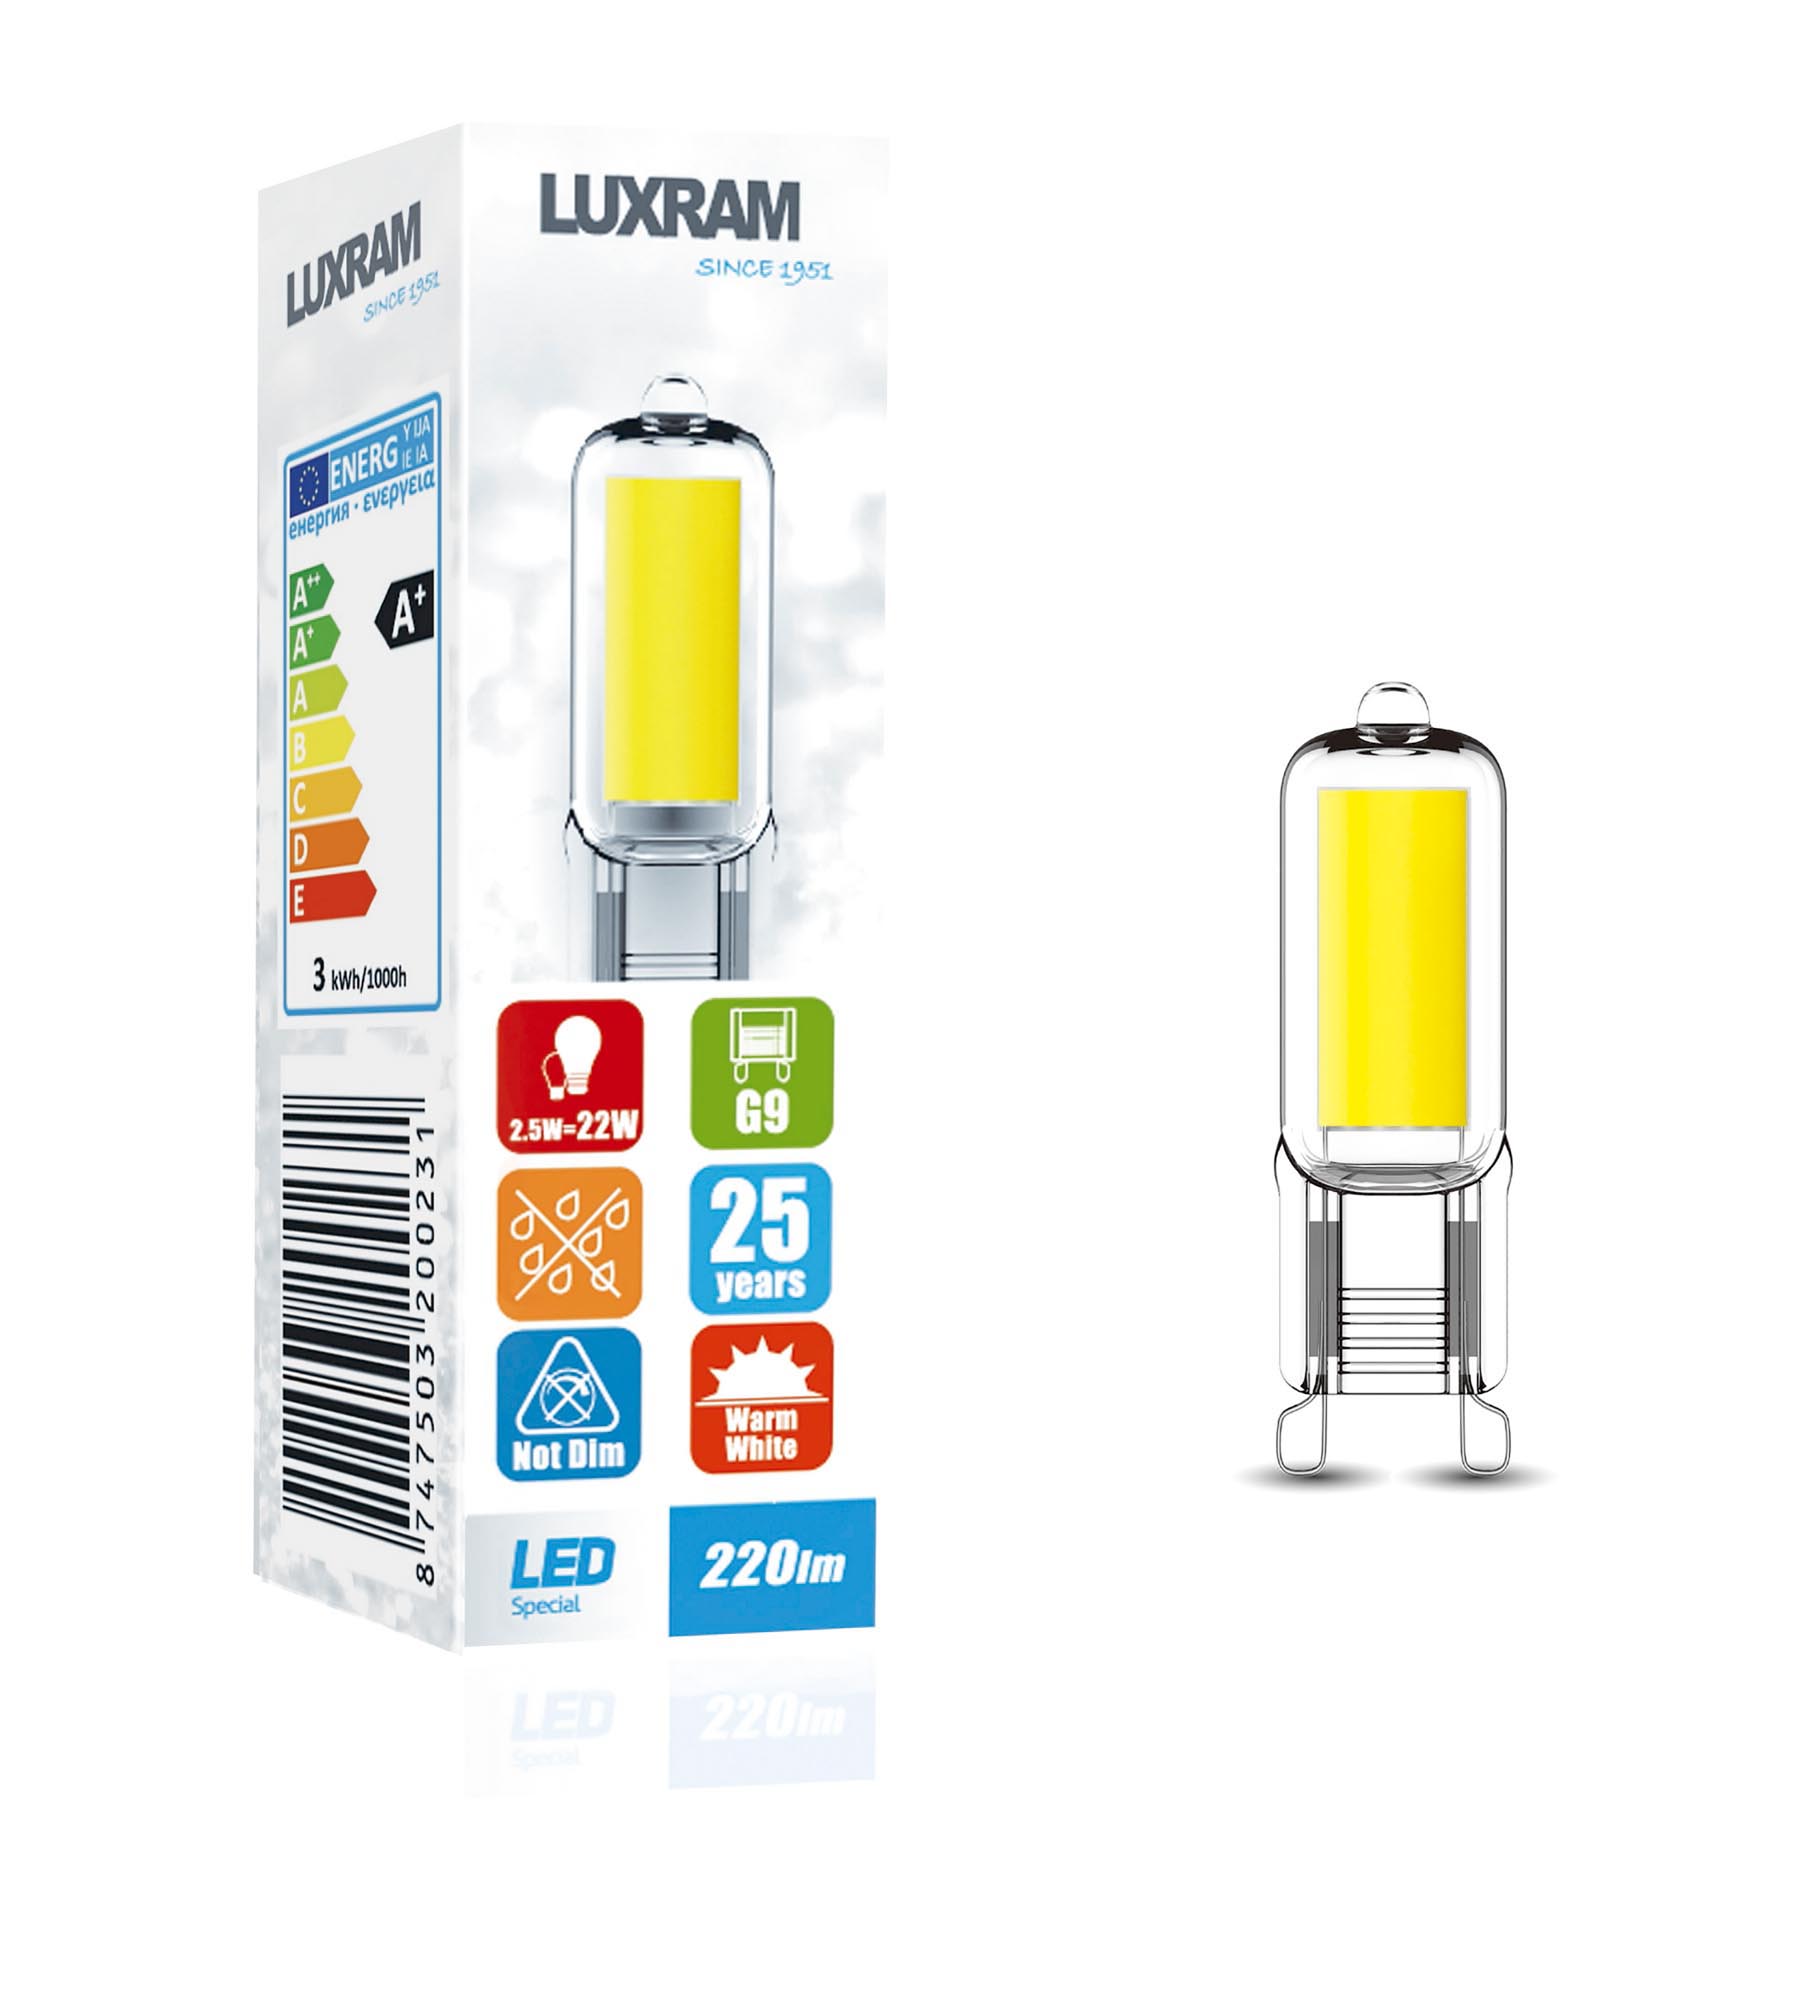 HaloLED LED Lamps Luxram Capsule